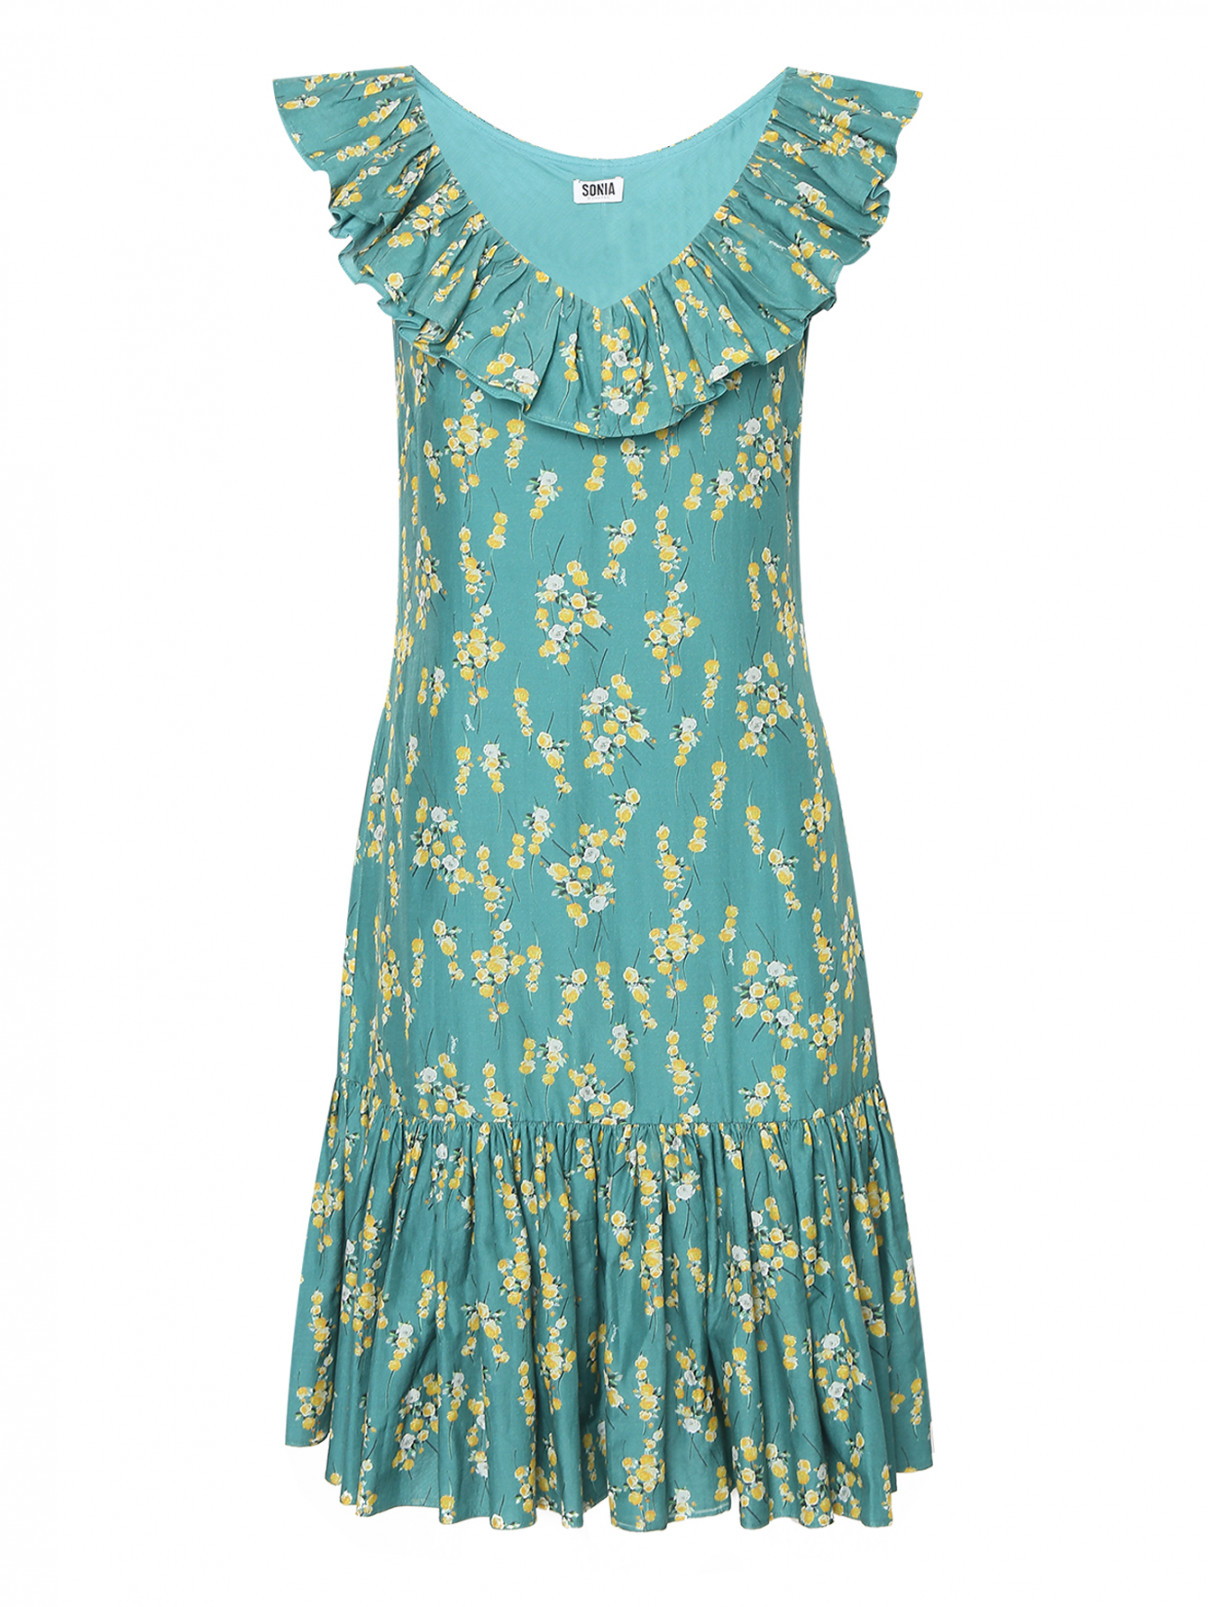 Платье-мини с узором без рукавов Sonia Rykiel  –  Общий вид  – Цвет:  Узор